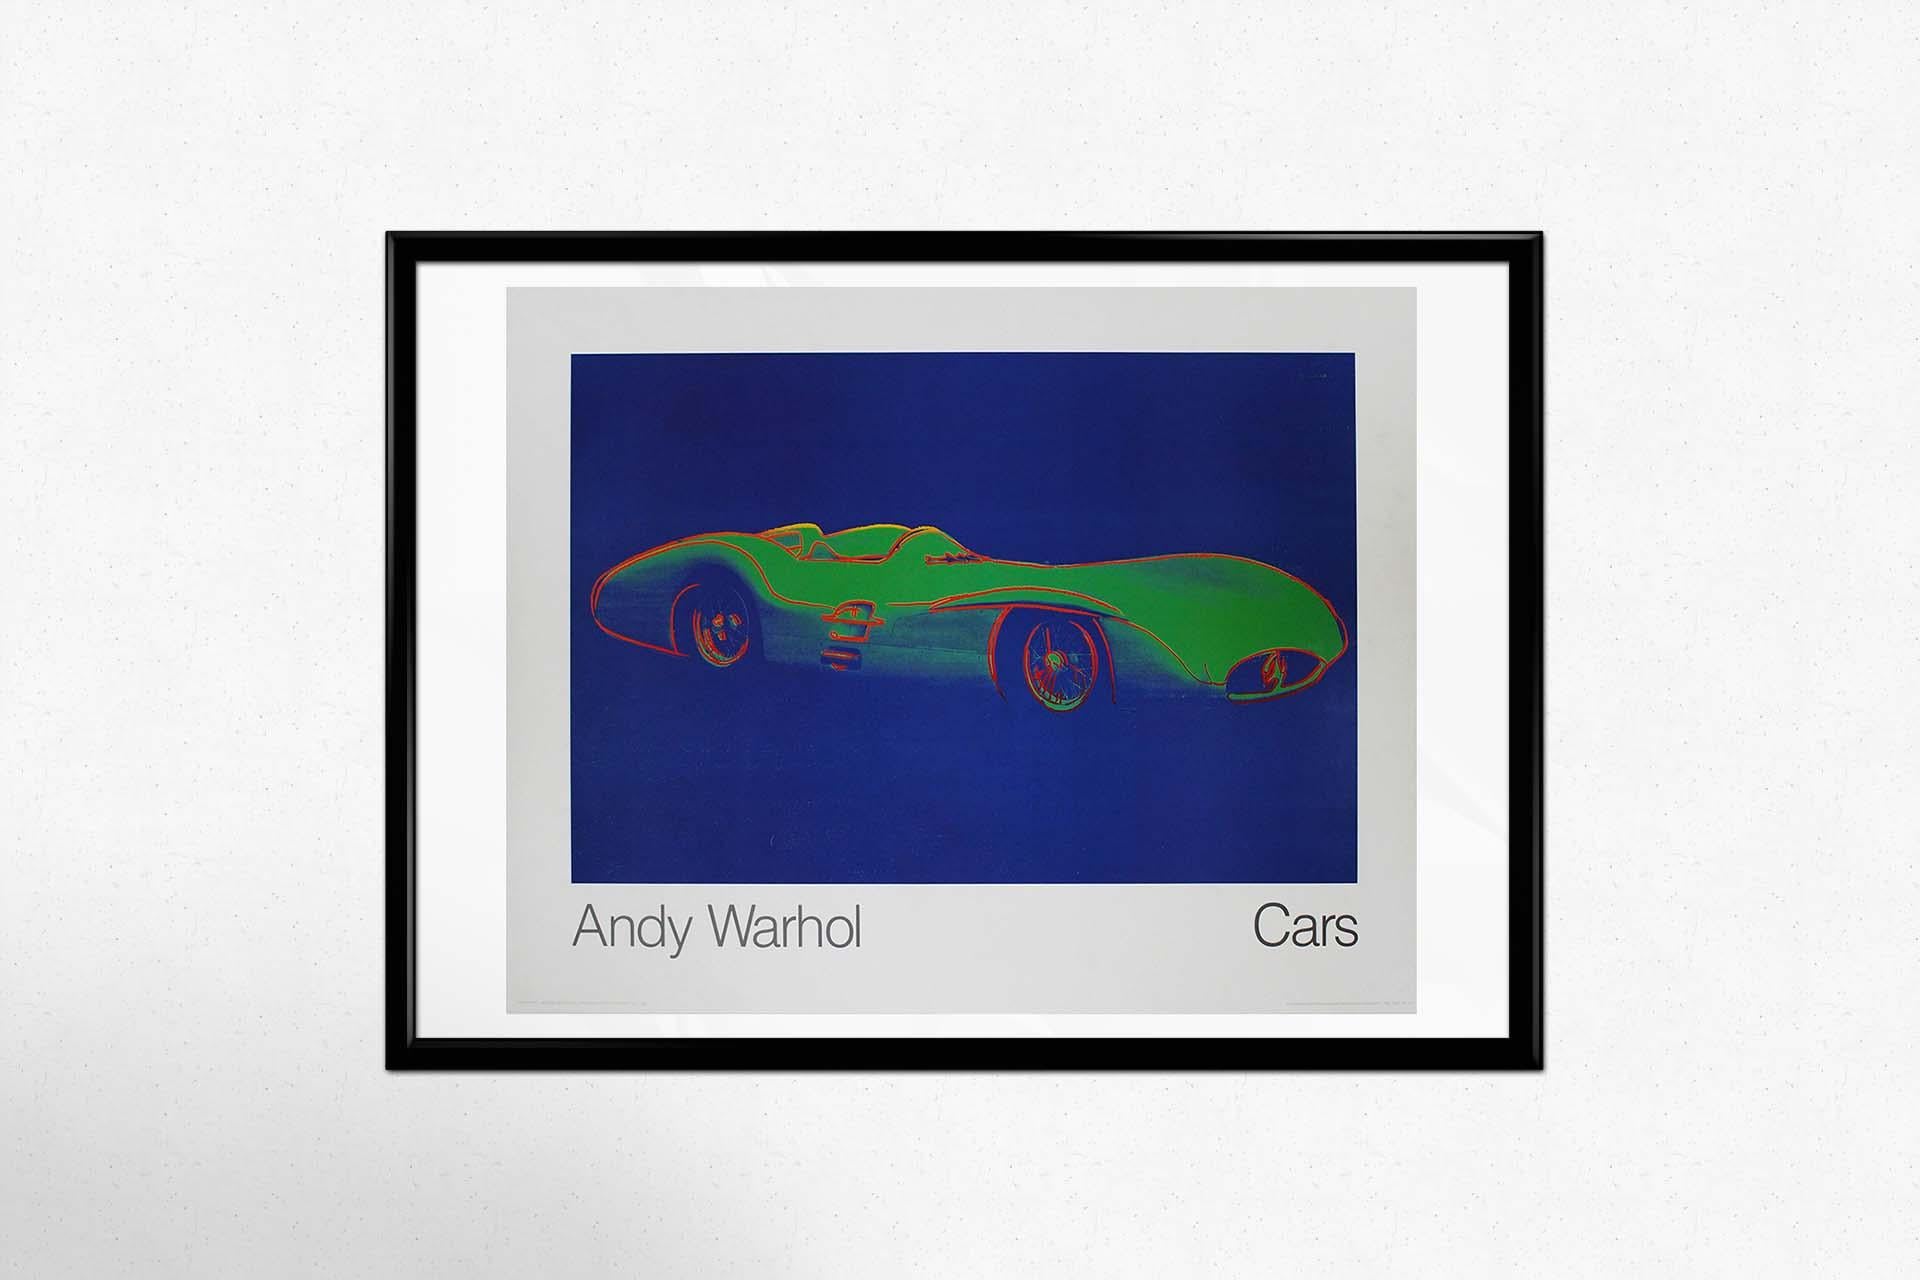 Andy Warhol's 1988 Cars series - Mercedes Benz W 196 R Stromlinie - Pop Art 1